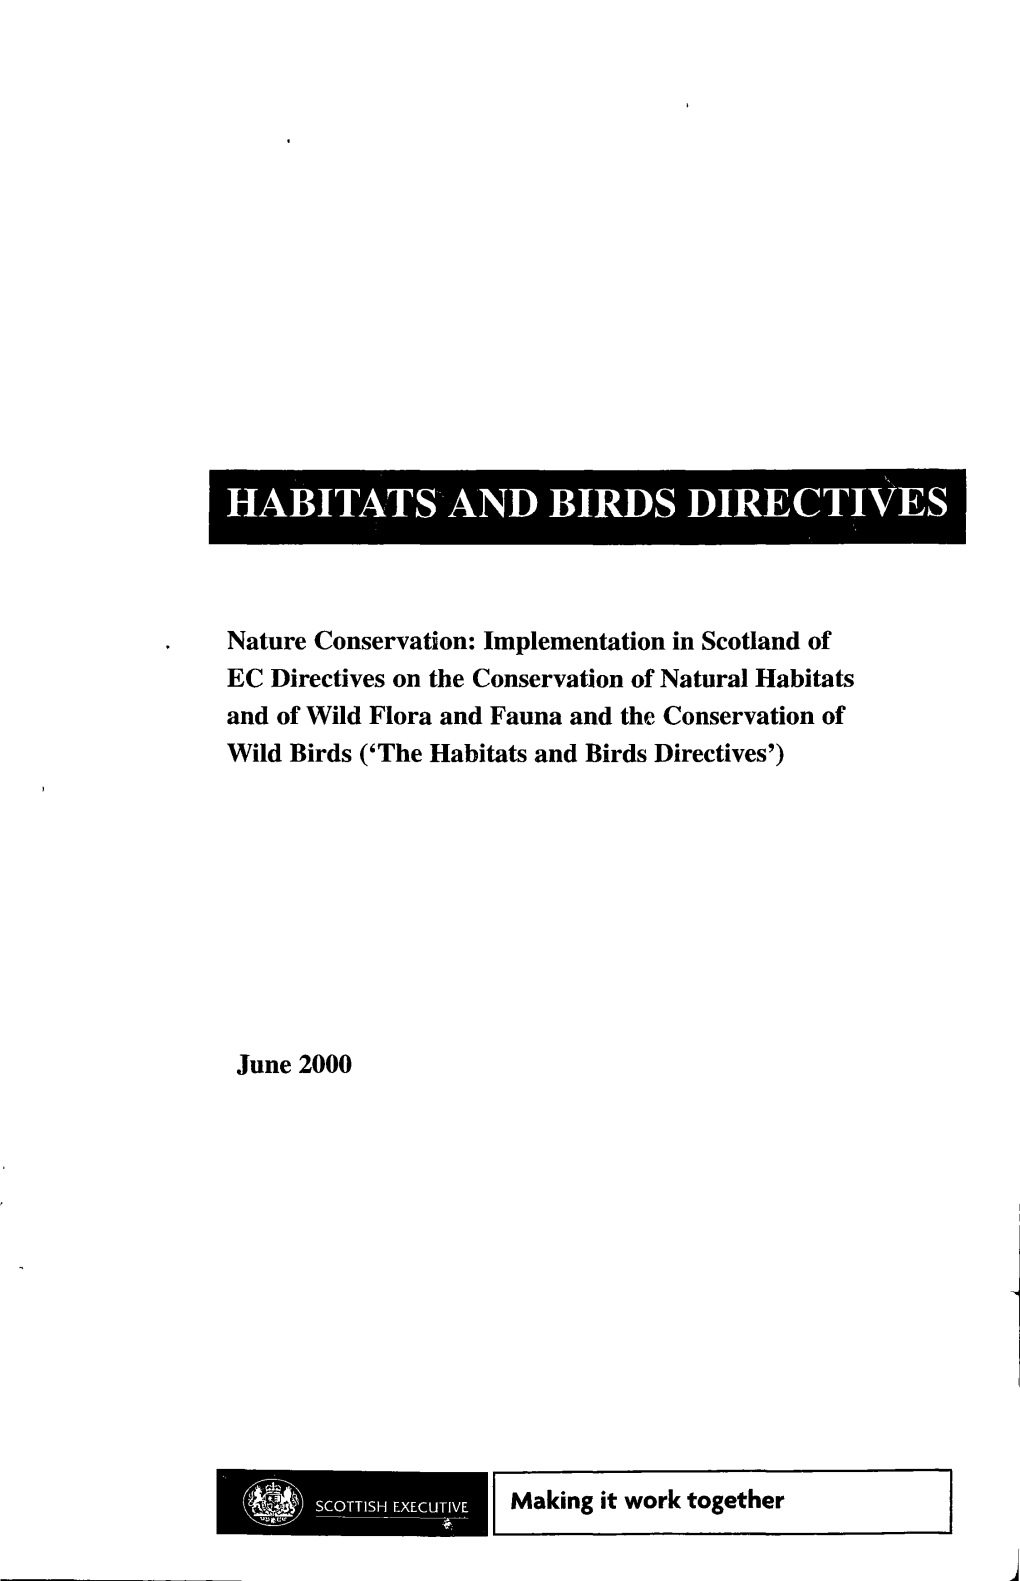 Habitats and Birds Directives